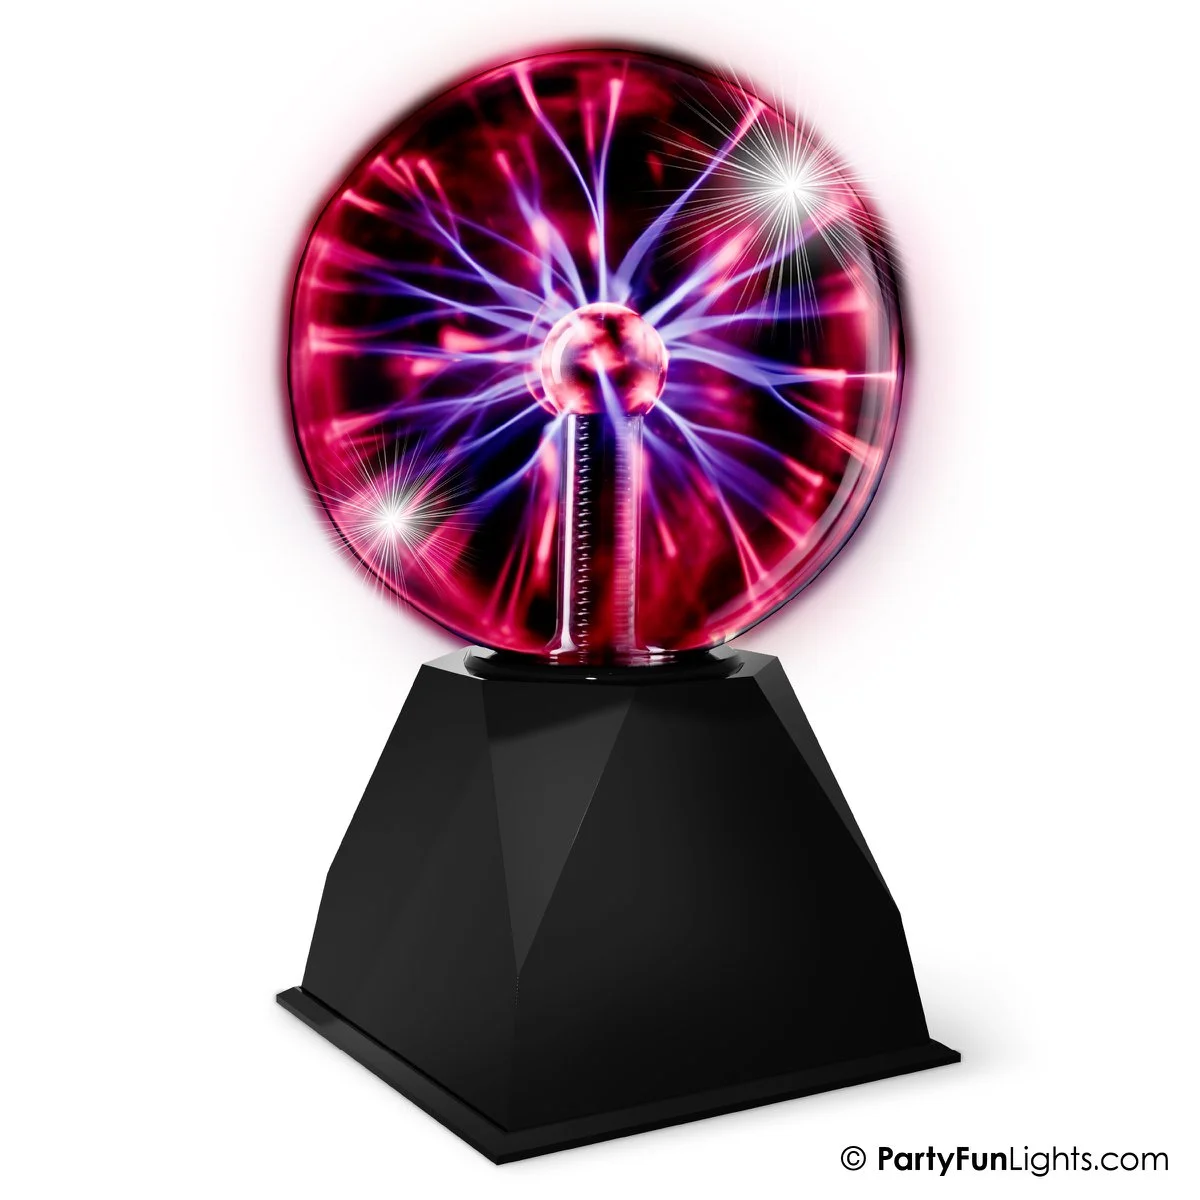 PartyFunLights - Plasma-Kugellampe -   reagiert auf Berührung